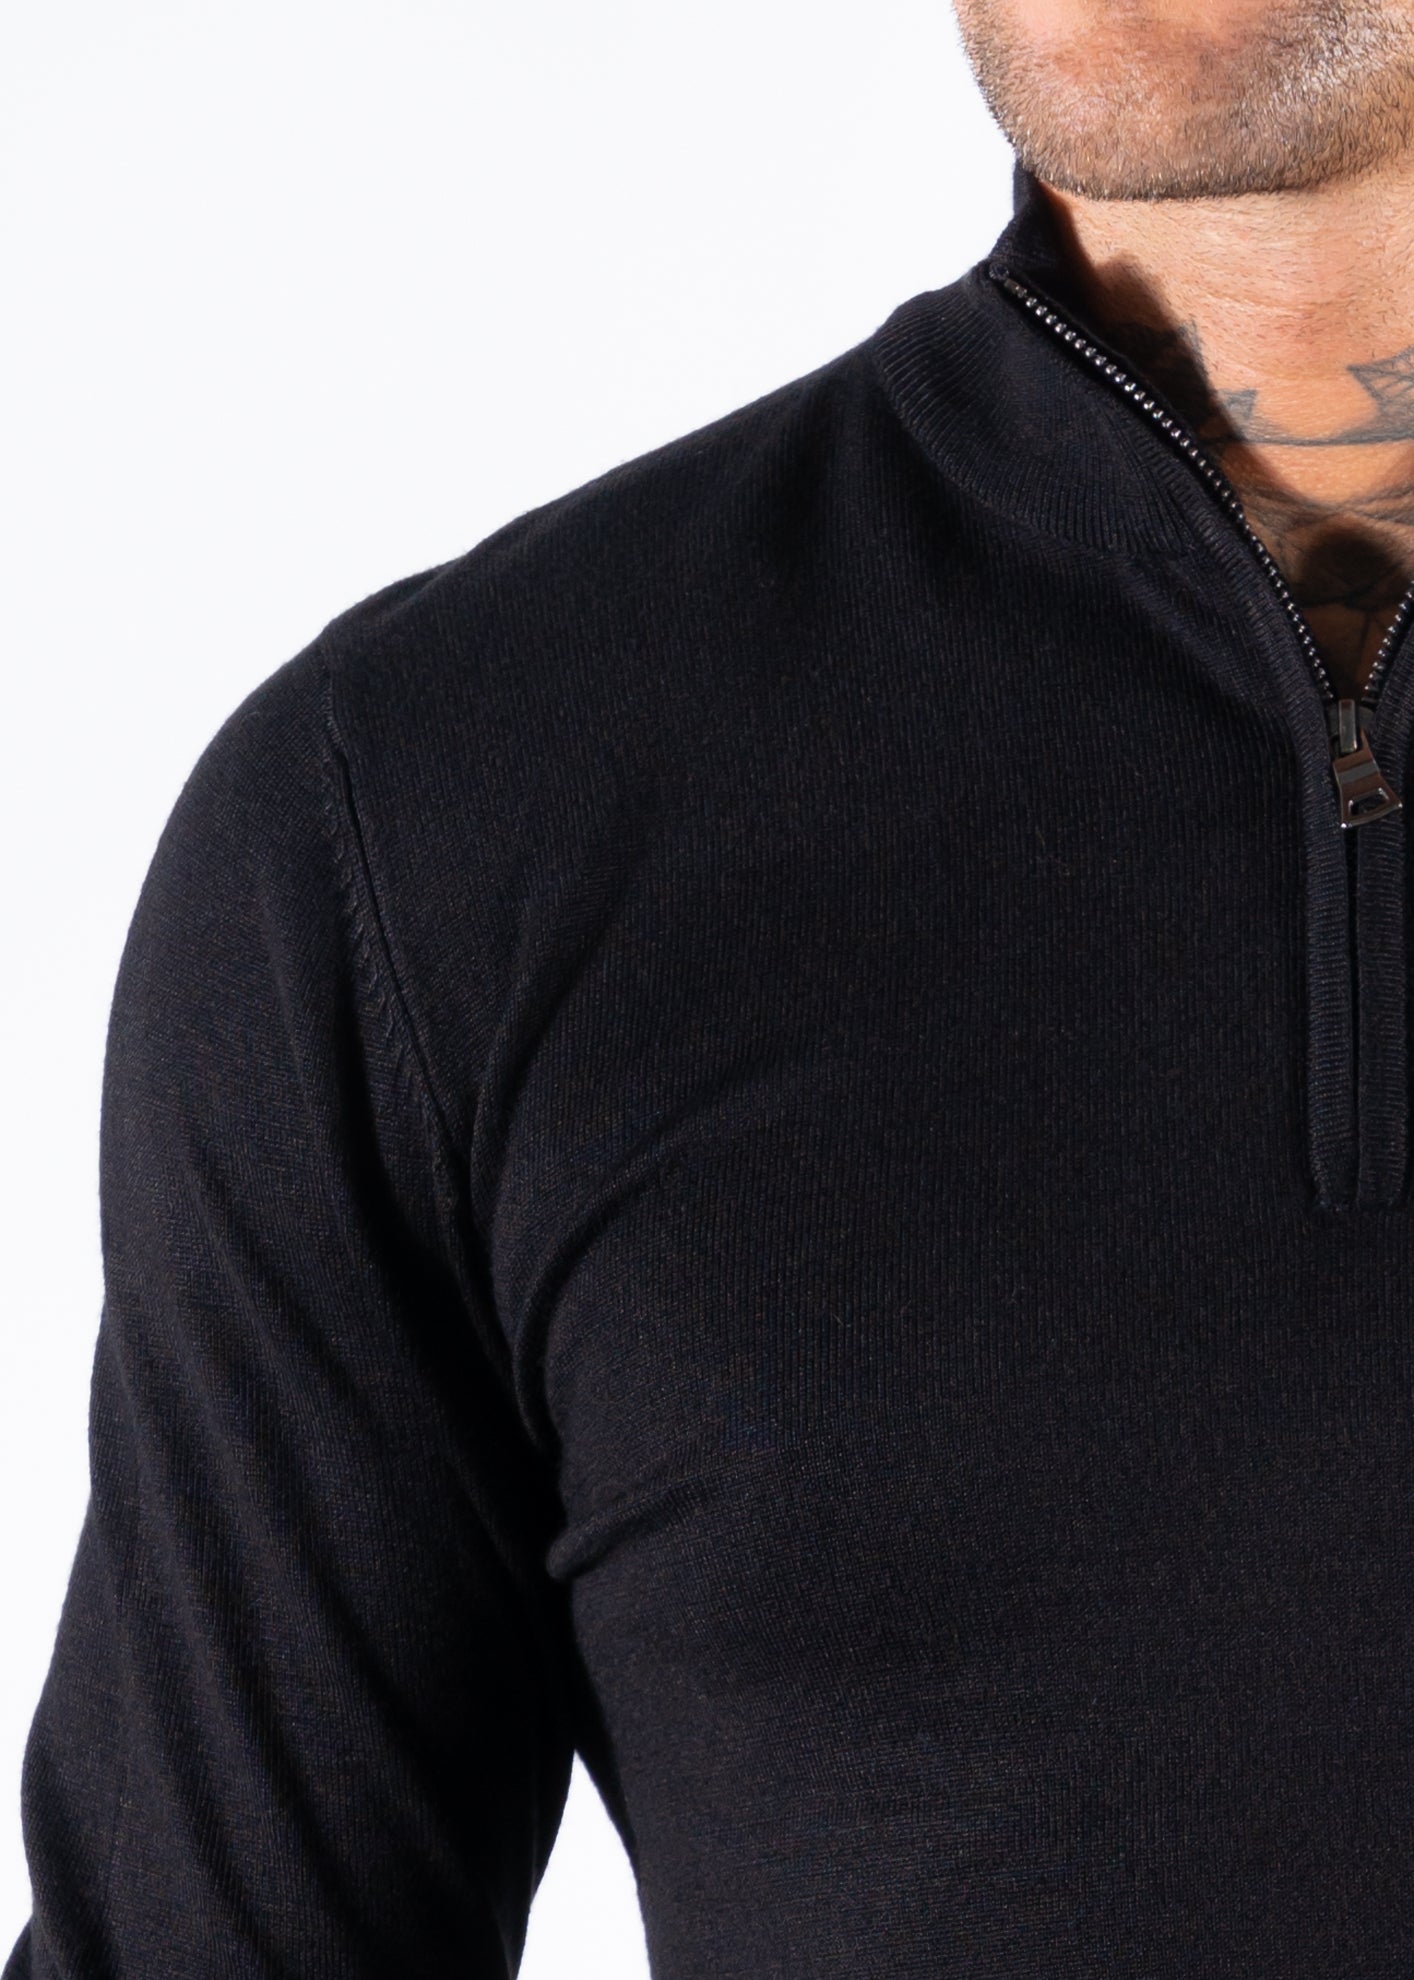 Sweater zipper black